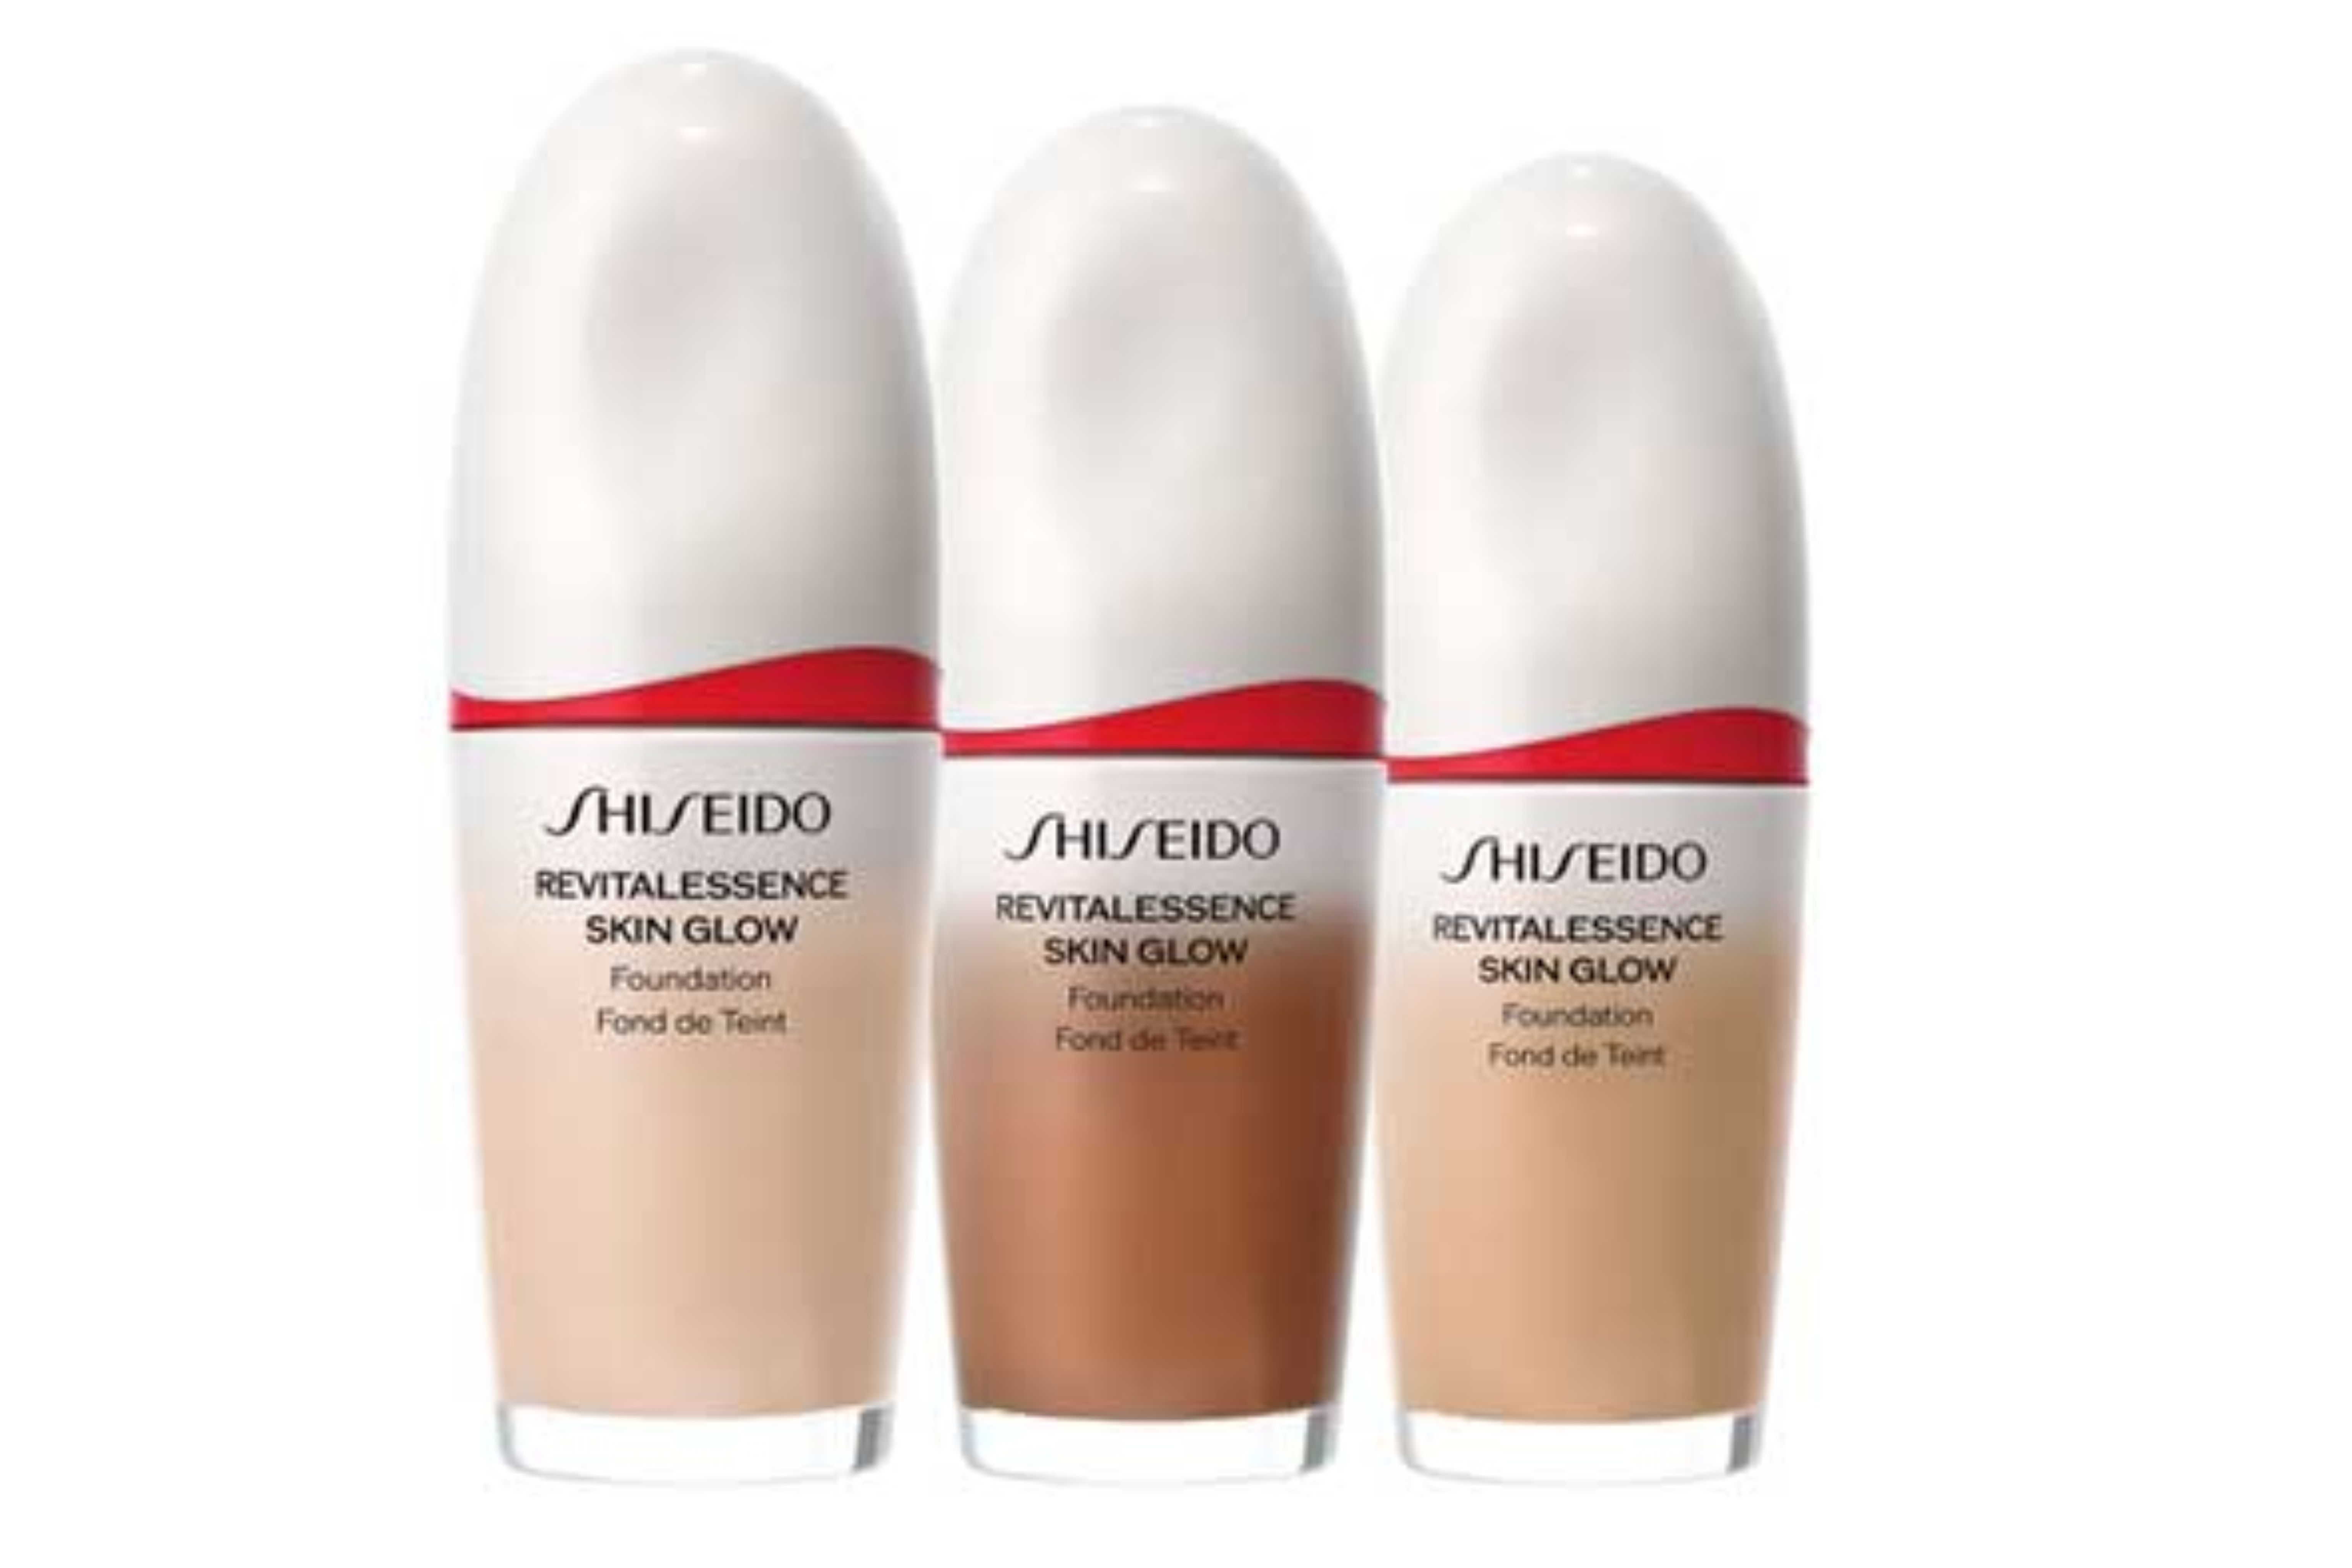 Shiseido Revitalessemce Skin Glow (Reprodução)